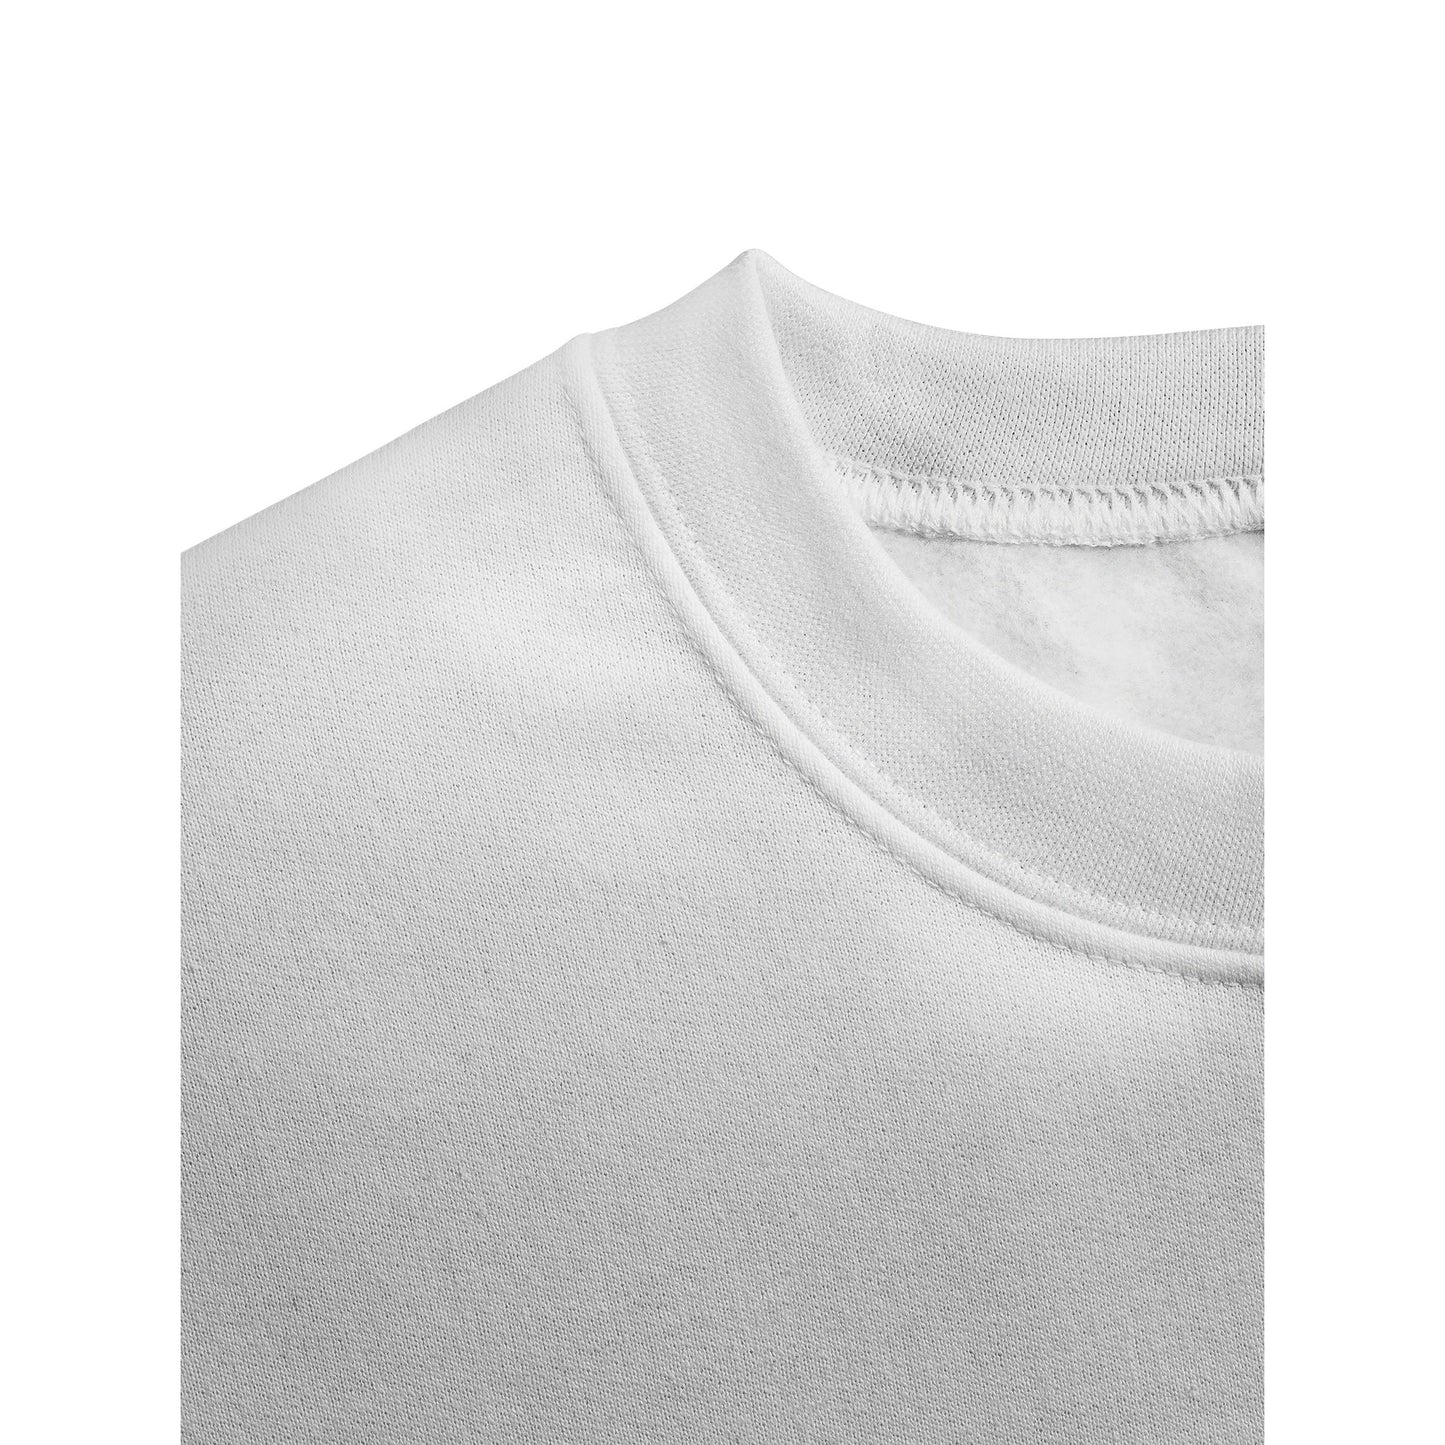 FUMIGANS FRATRIBUS / Sweatshirt / white